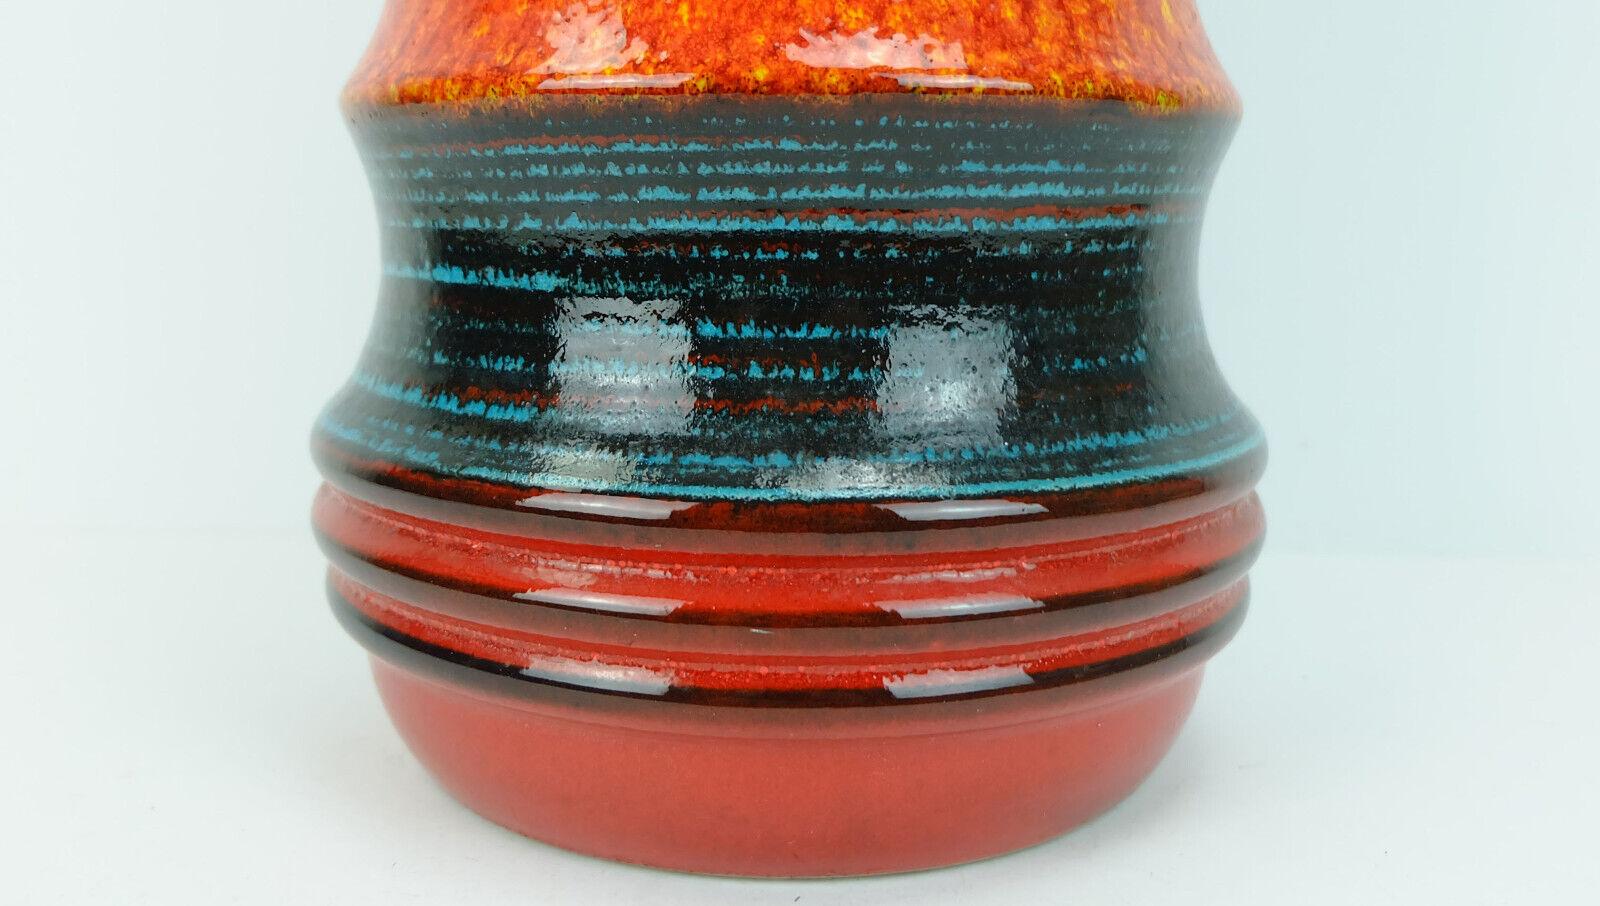 Ceramic large scheurich ceramic floorvase model 427-47 stripe pattern red orange black For Sale